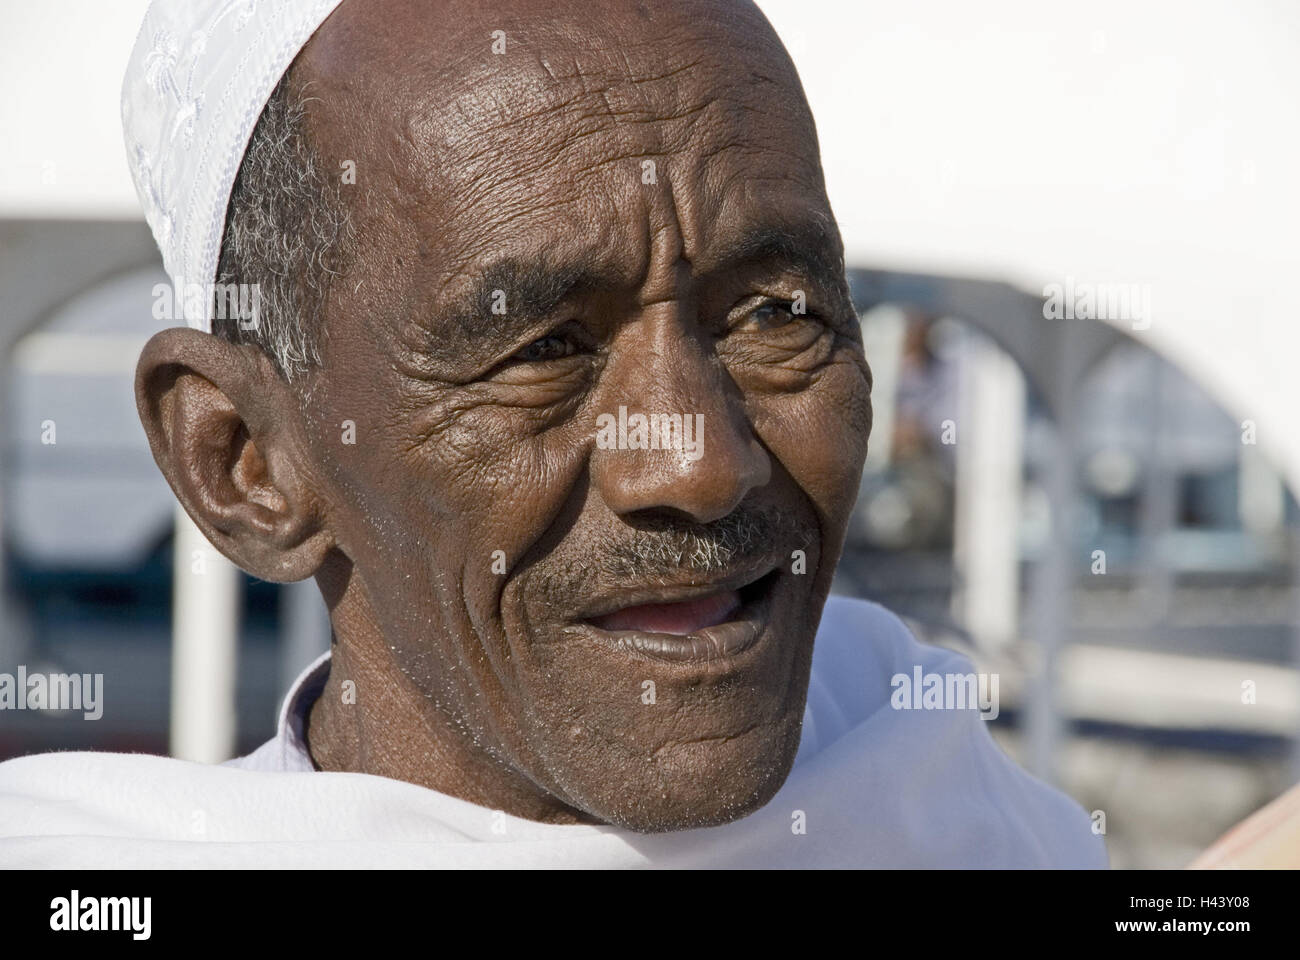 Egypt, senior, portrait, Upper Egypt, person, man, Egyptian, headgear, smile, happy, old person, folds, satisfaction, Stock Photo